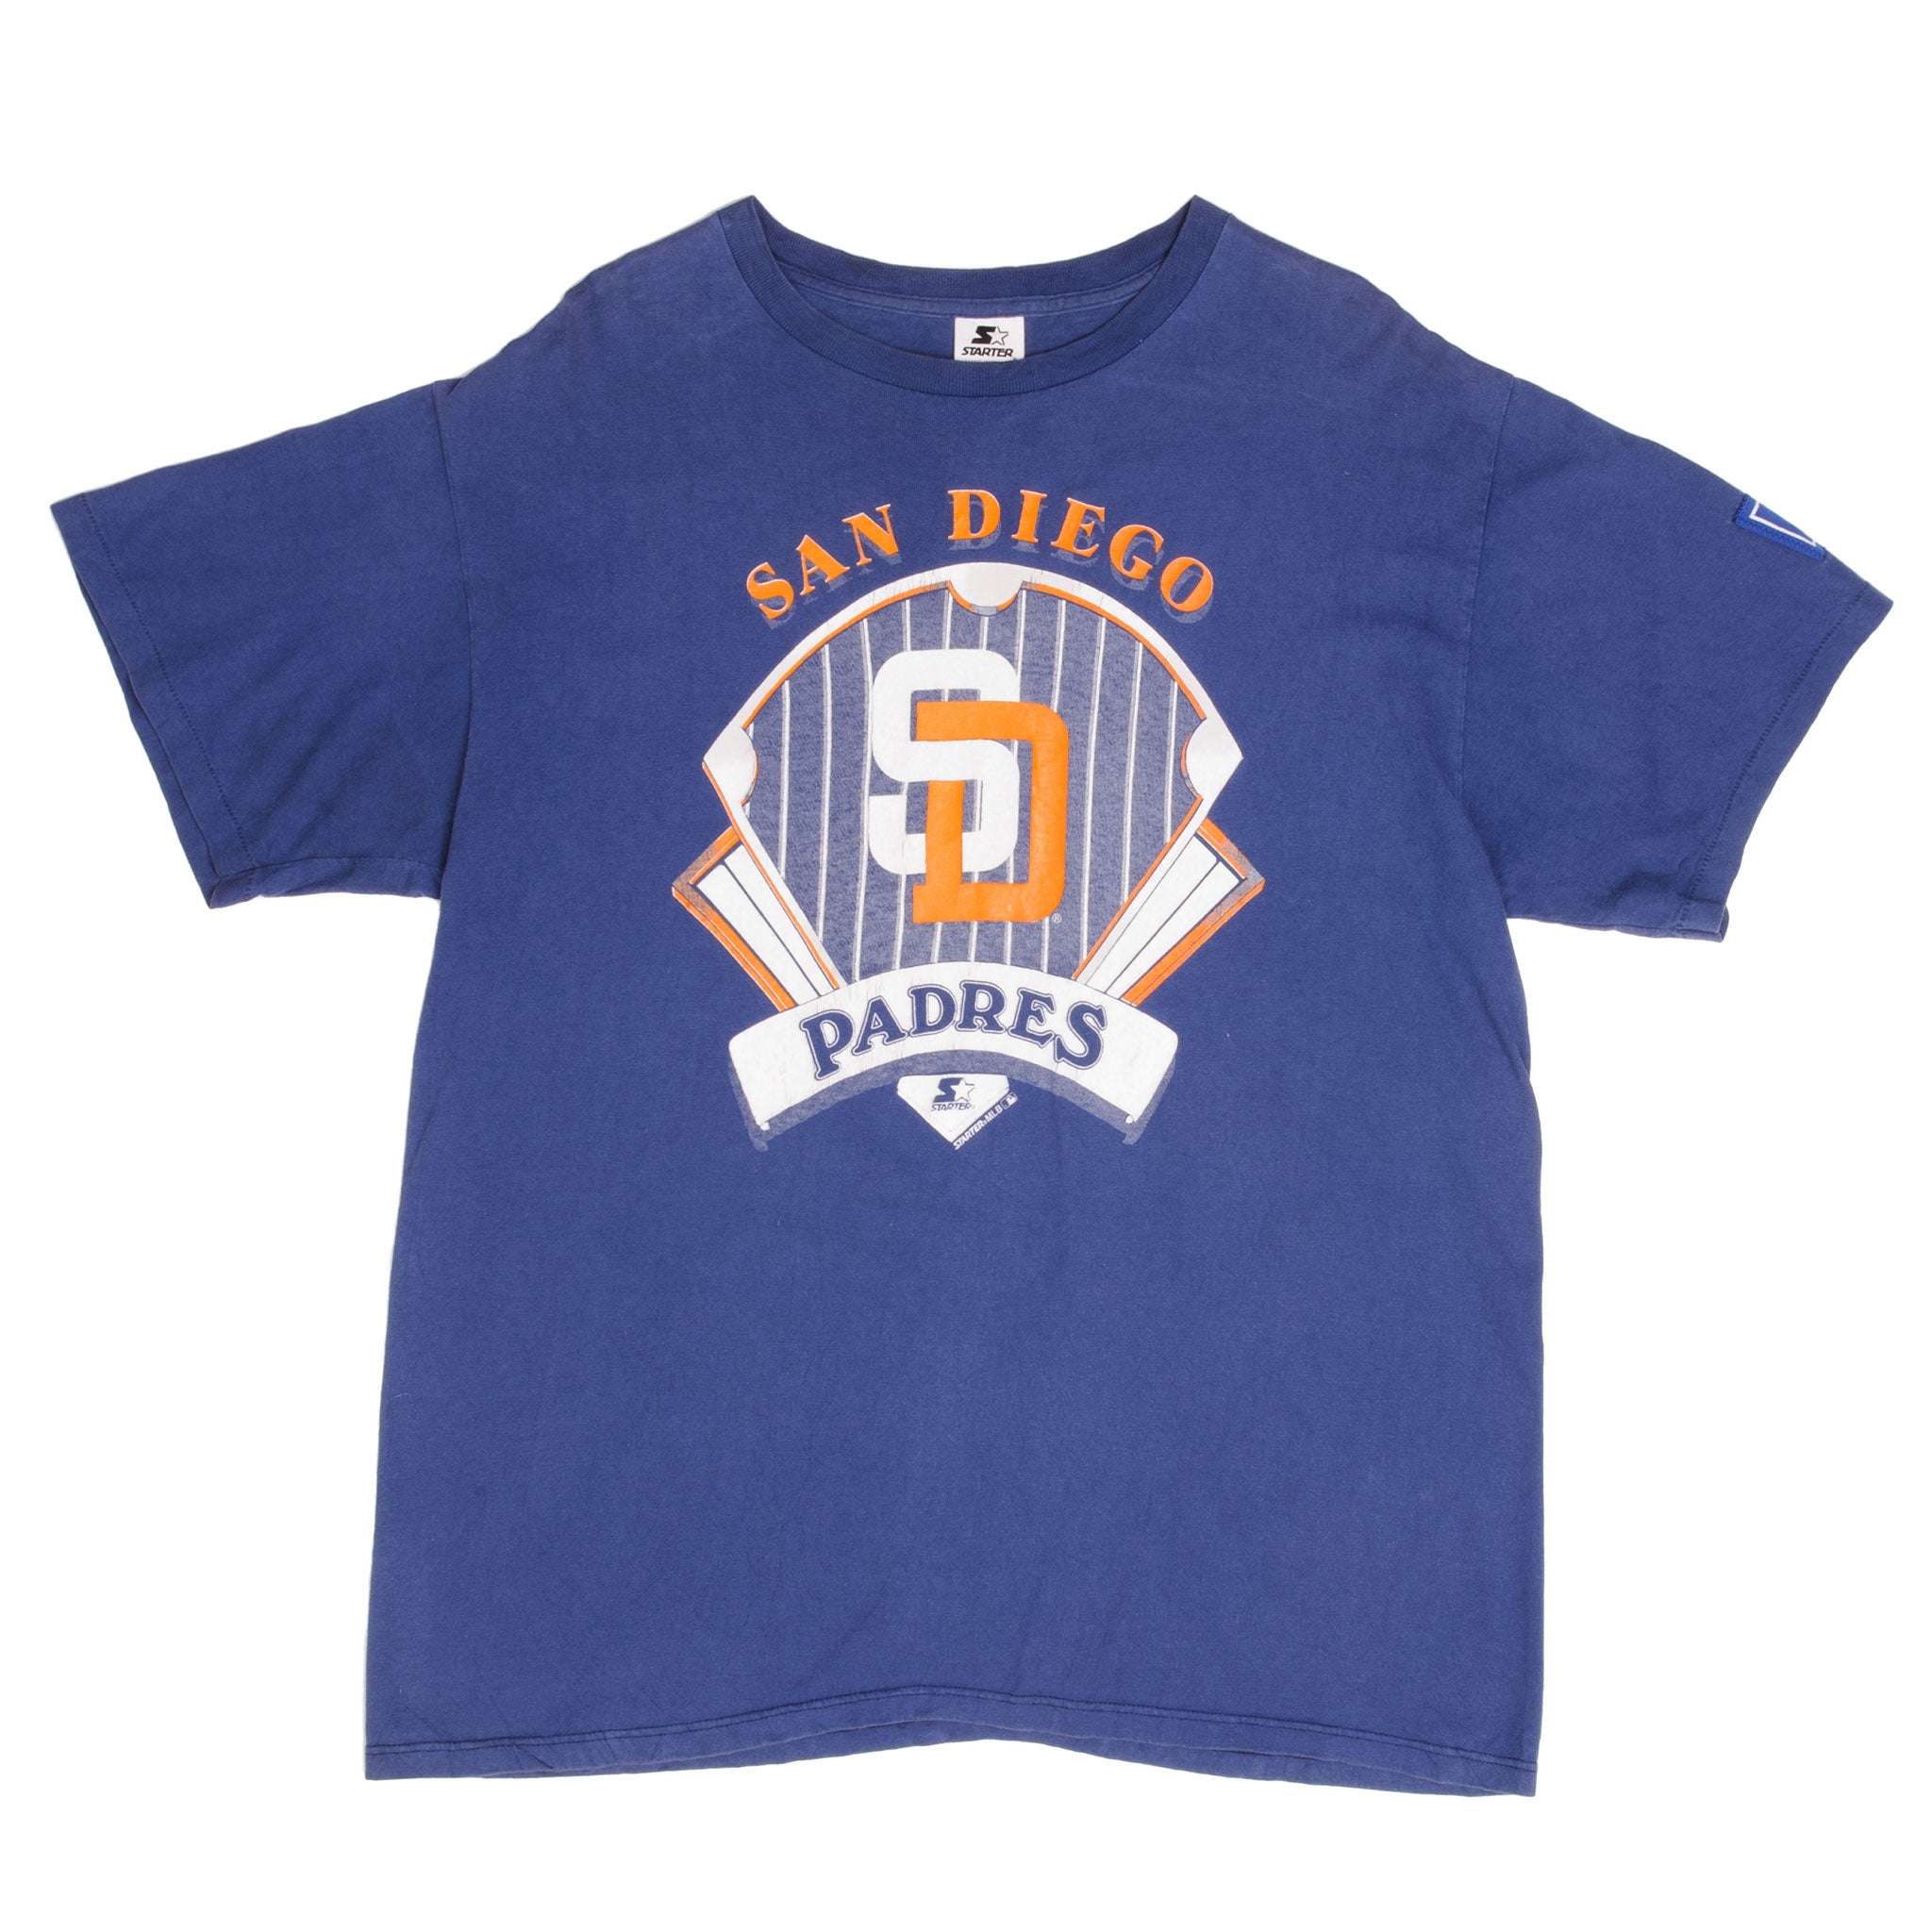 Very Rare Vintage San Diego Padres Baseball T Shirt Jersey